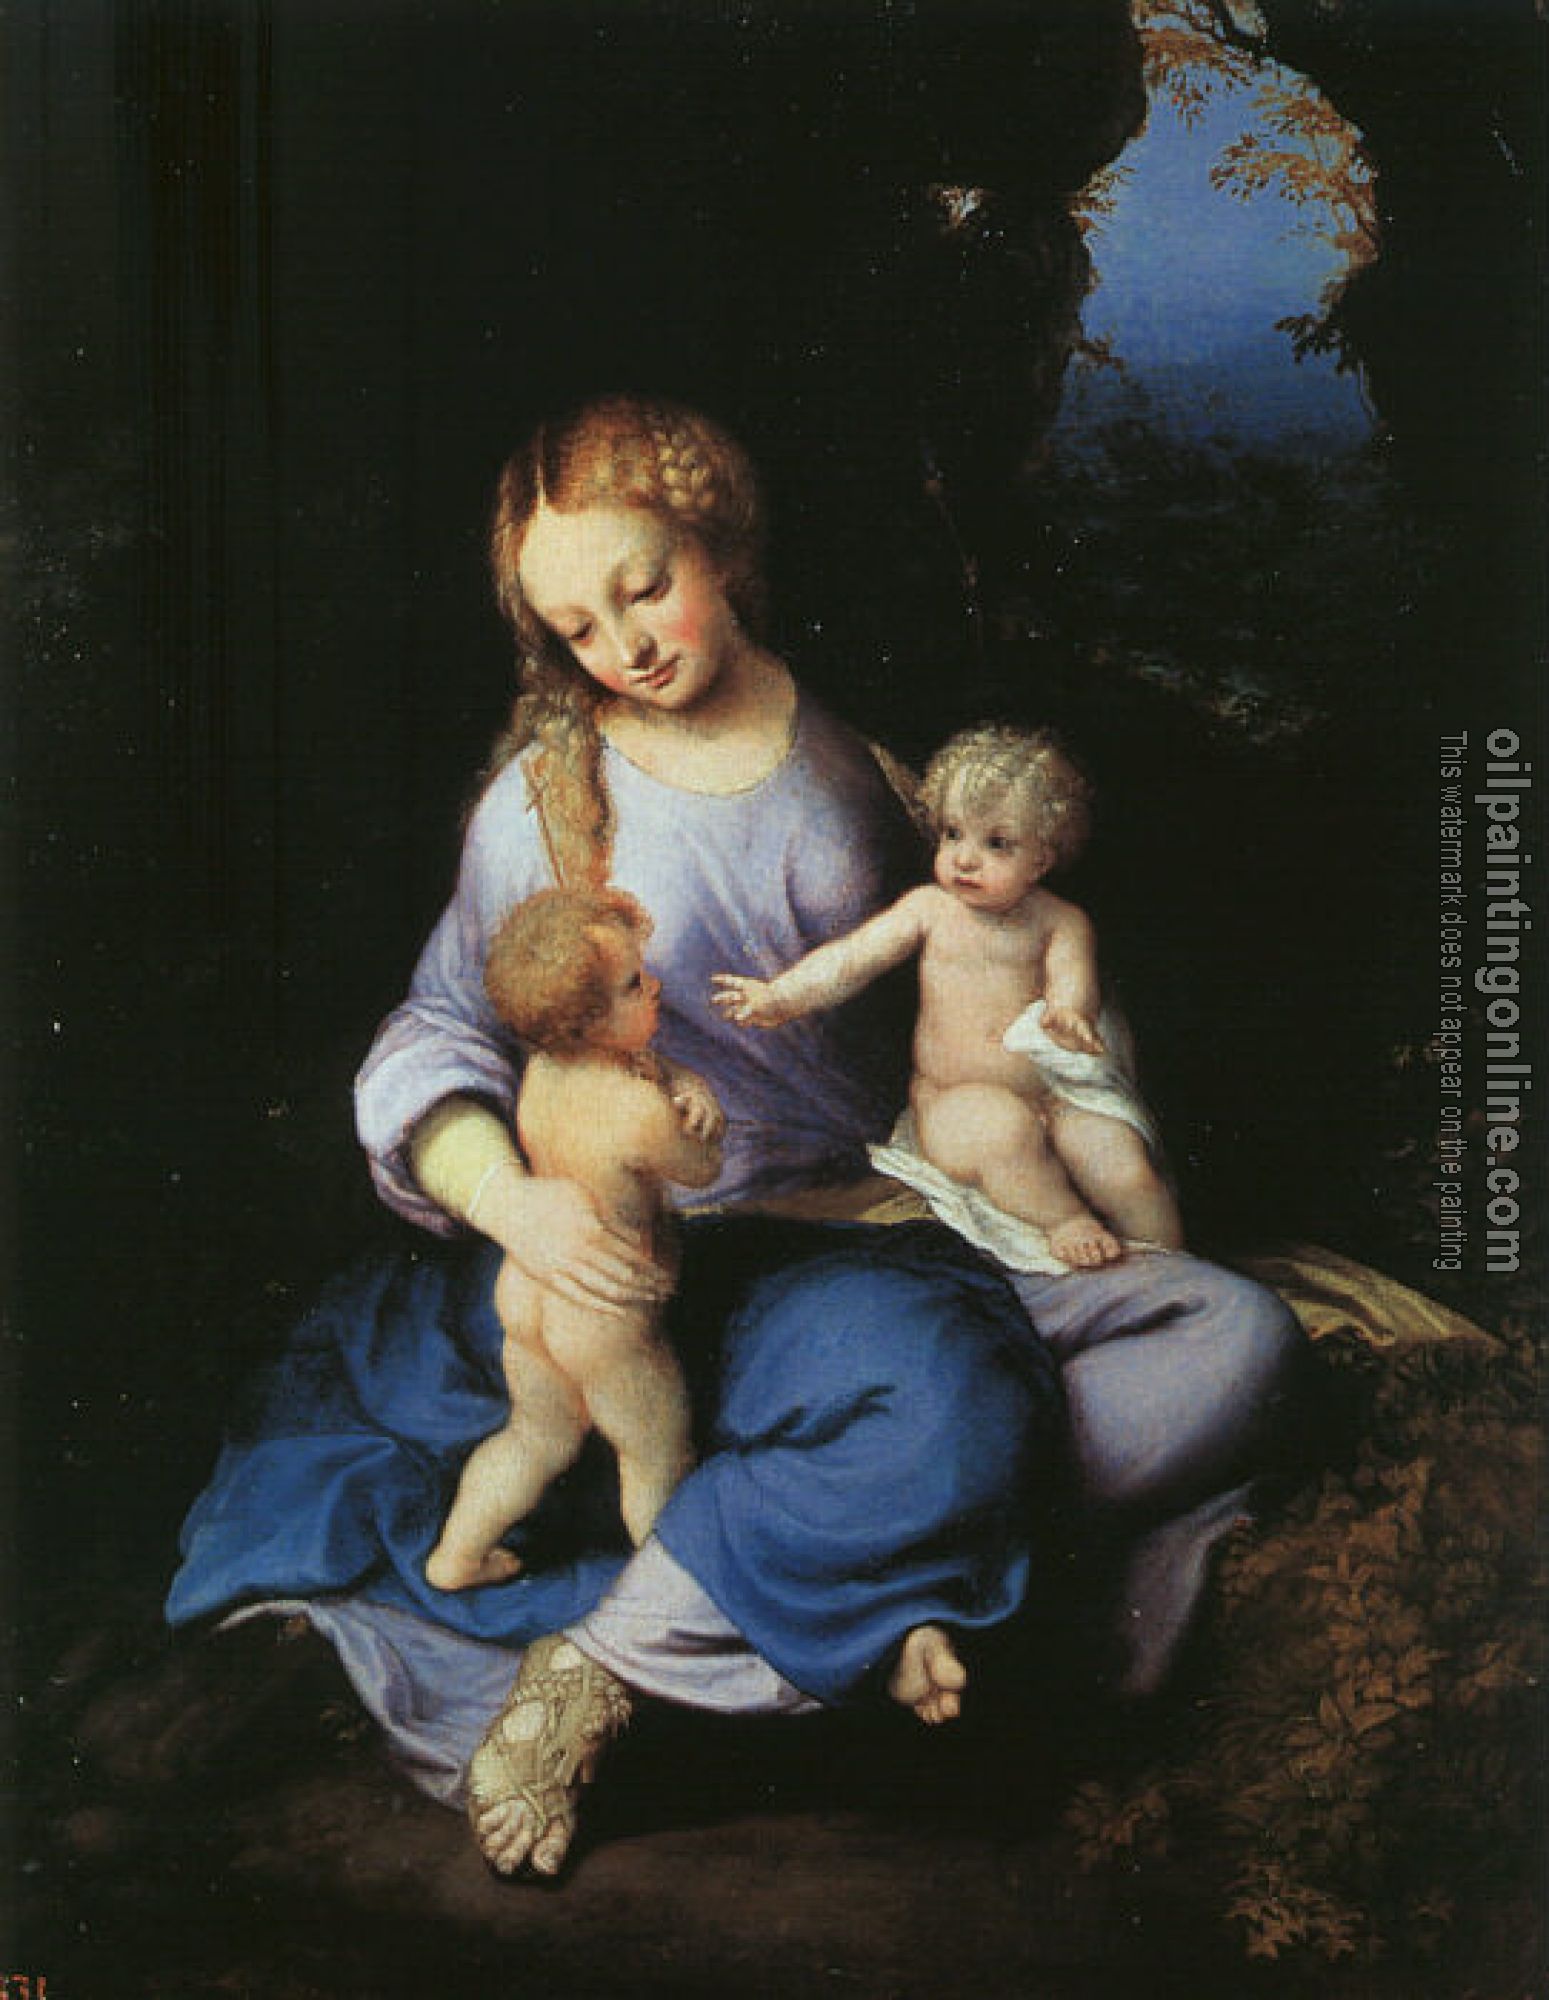 Correggio - Madonna and Child with the Young Saint John